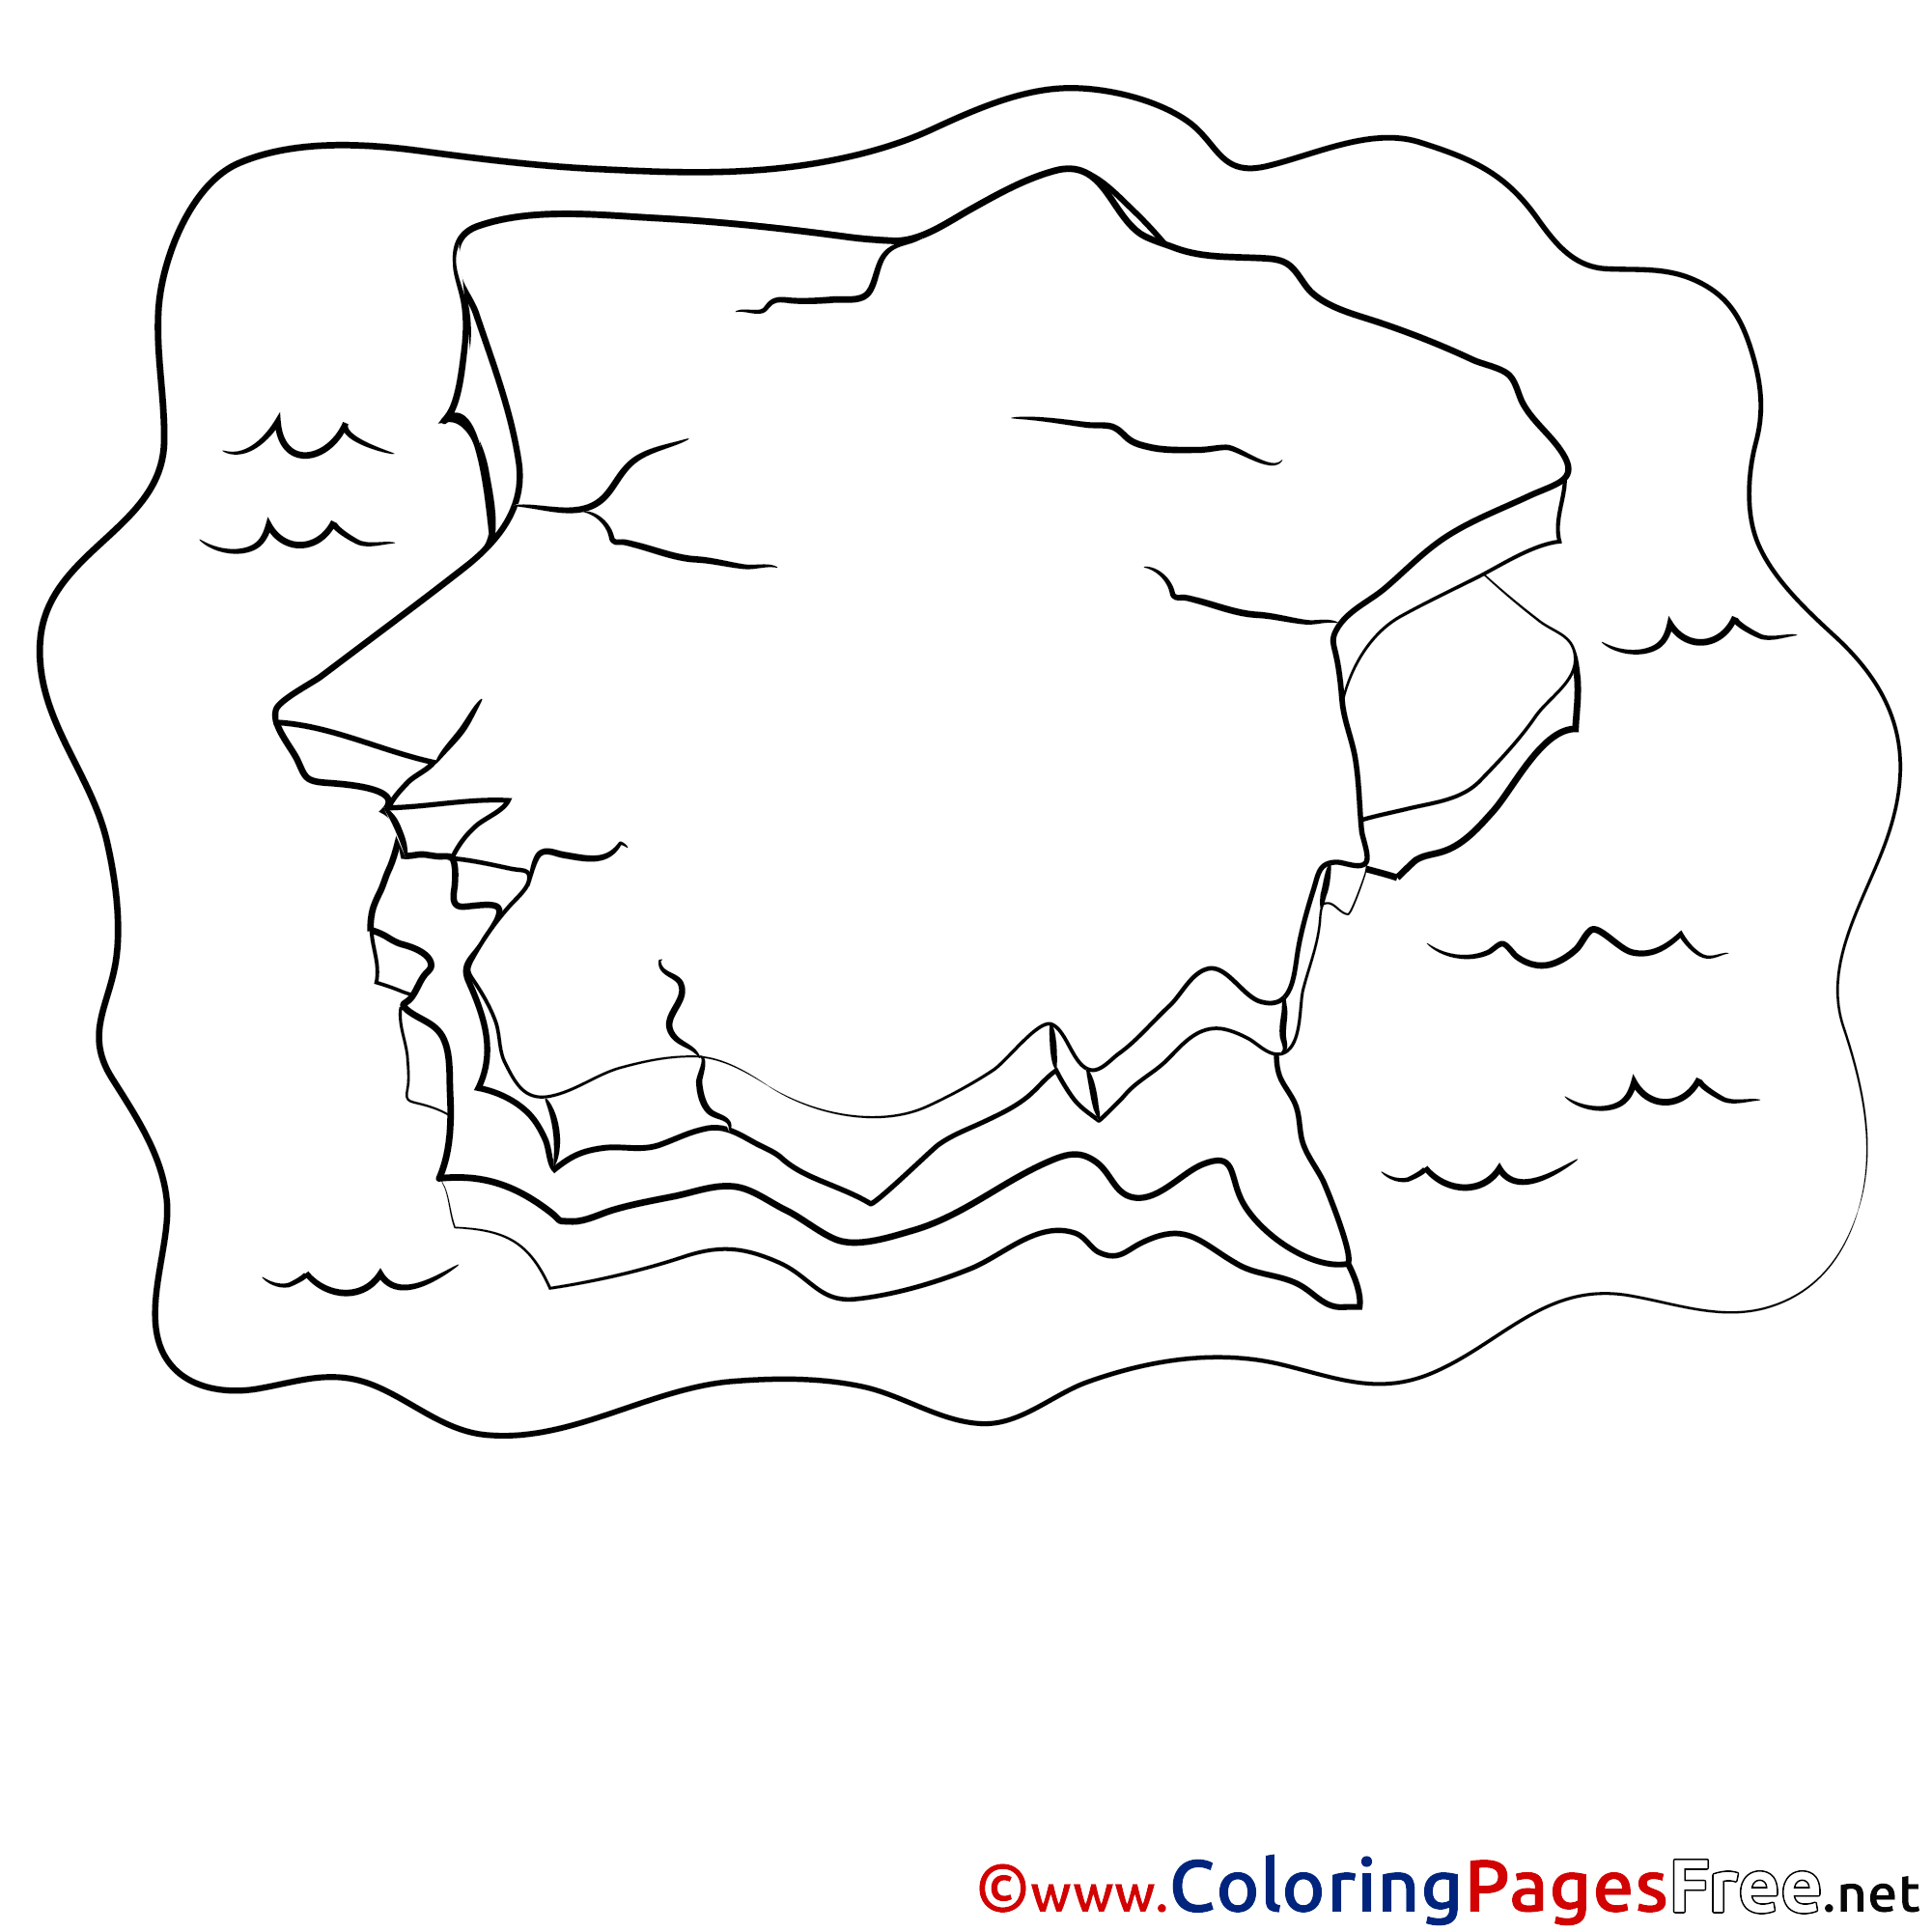 Icegerg coloring #5, Download drawings